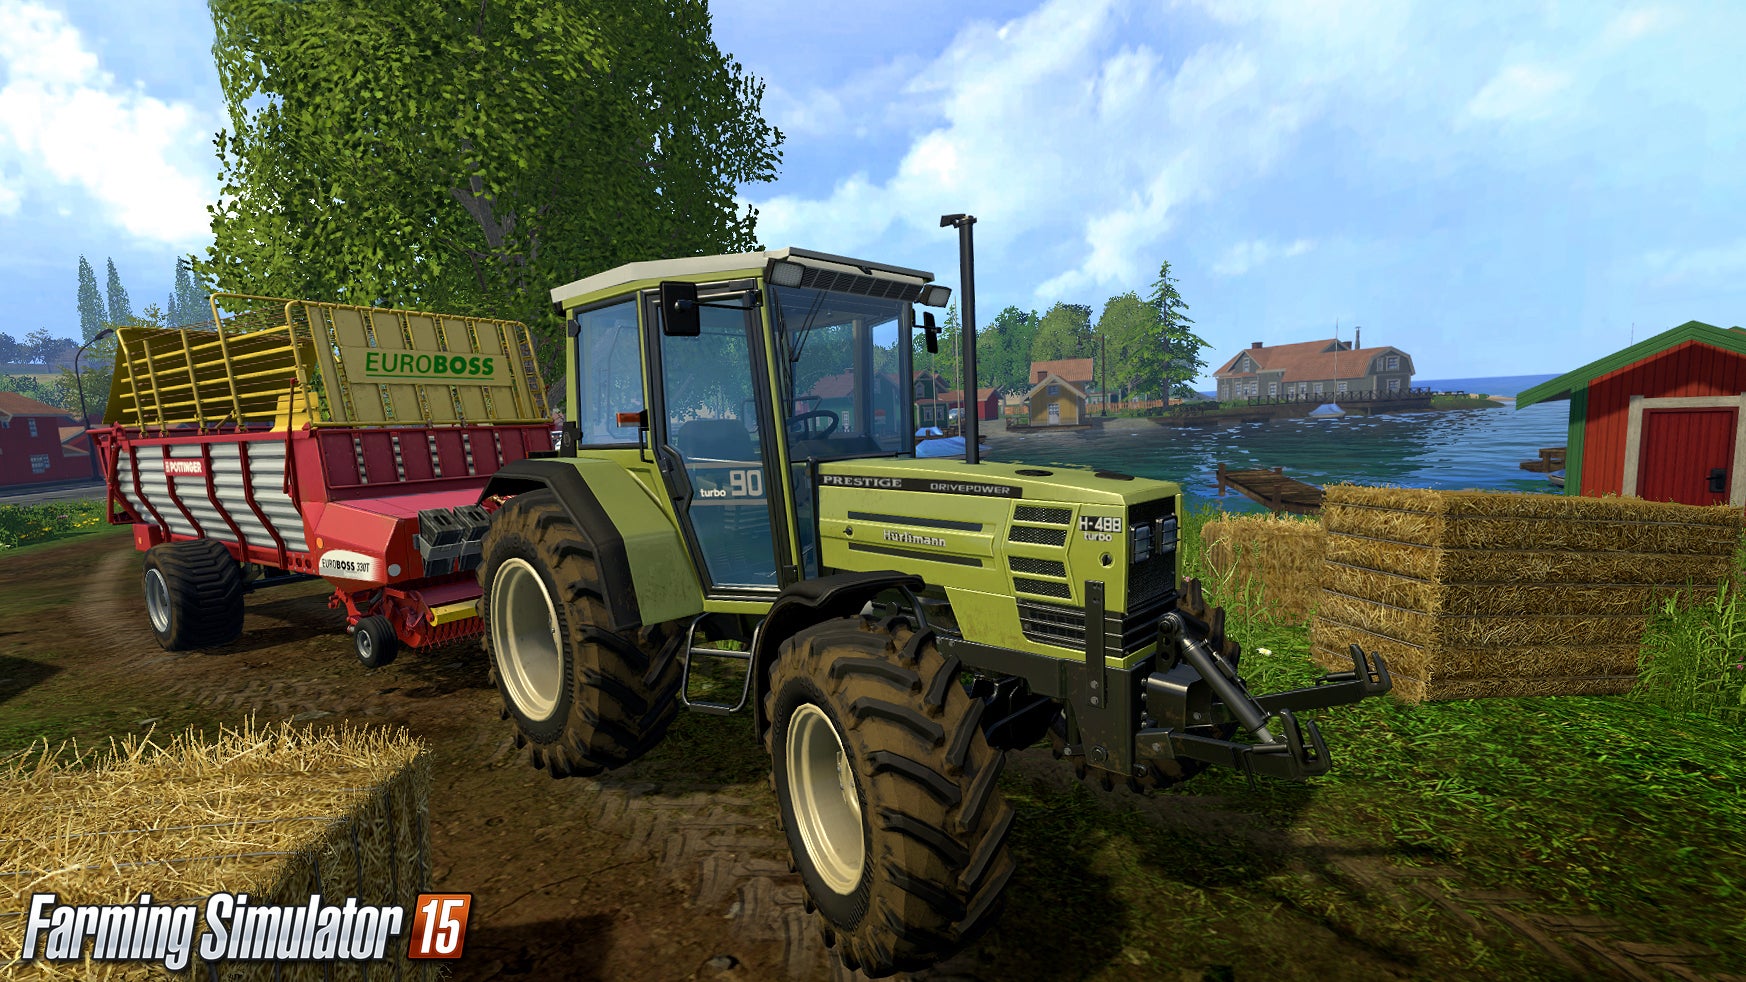 Obrazki dla Premiera Farming Simulator 15 na PC już 30 października